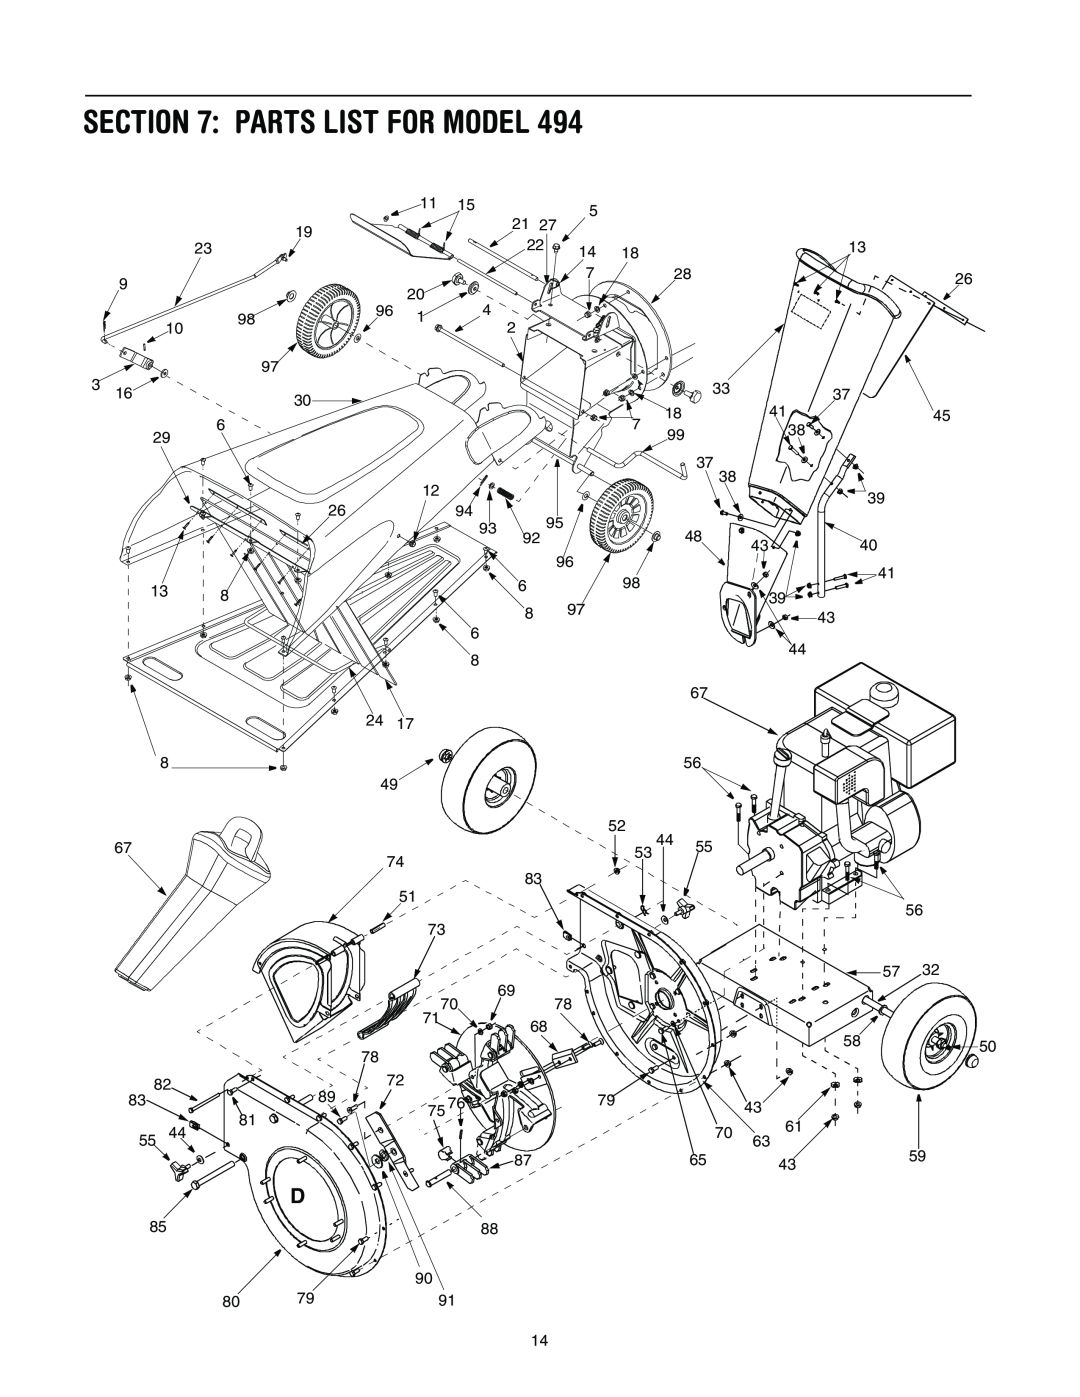 Troy-Bilt 494 manual Parts List For Model, 5850 